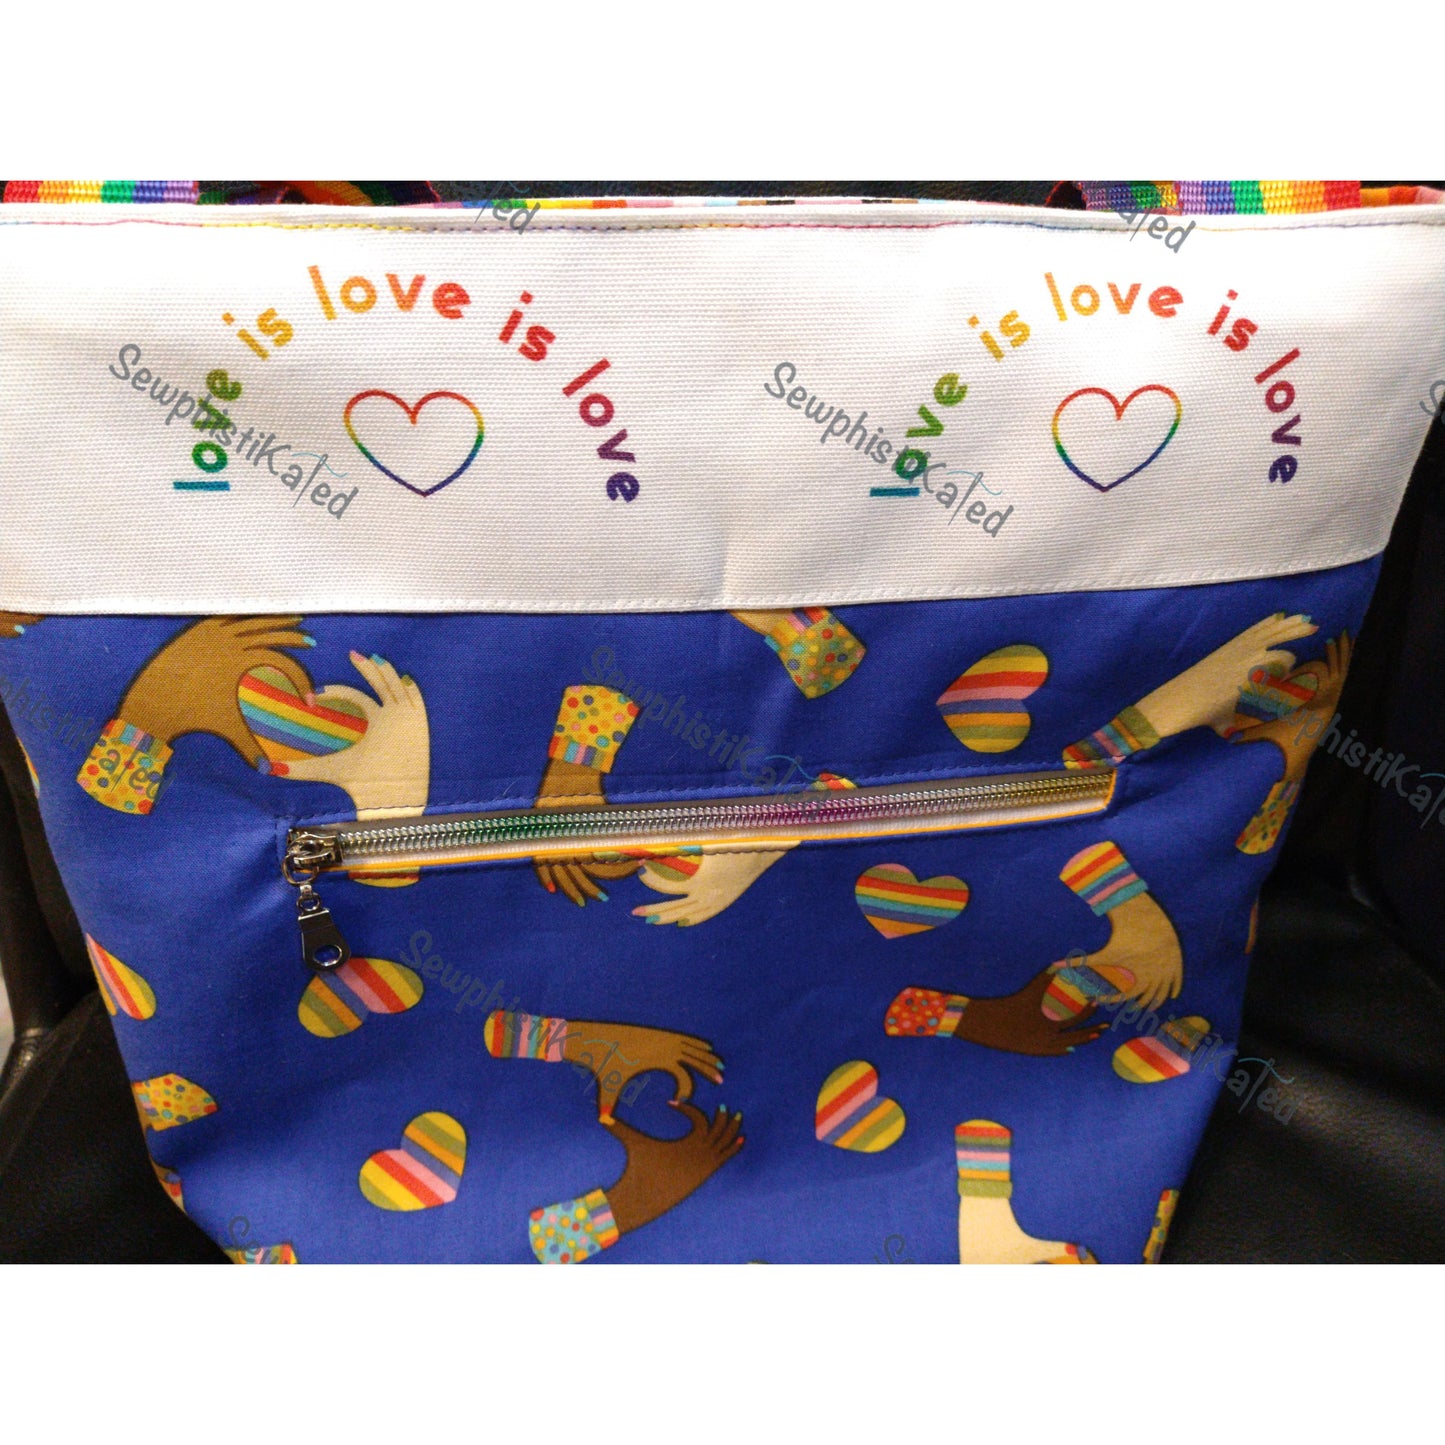 Love is Love Tote Shoulder Bag